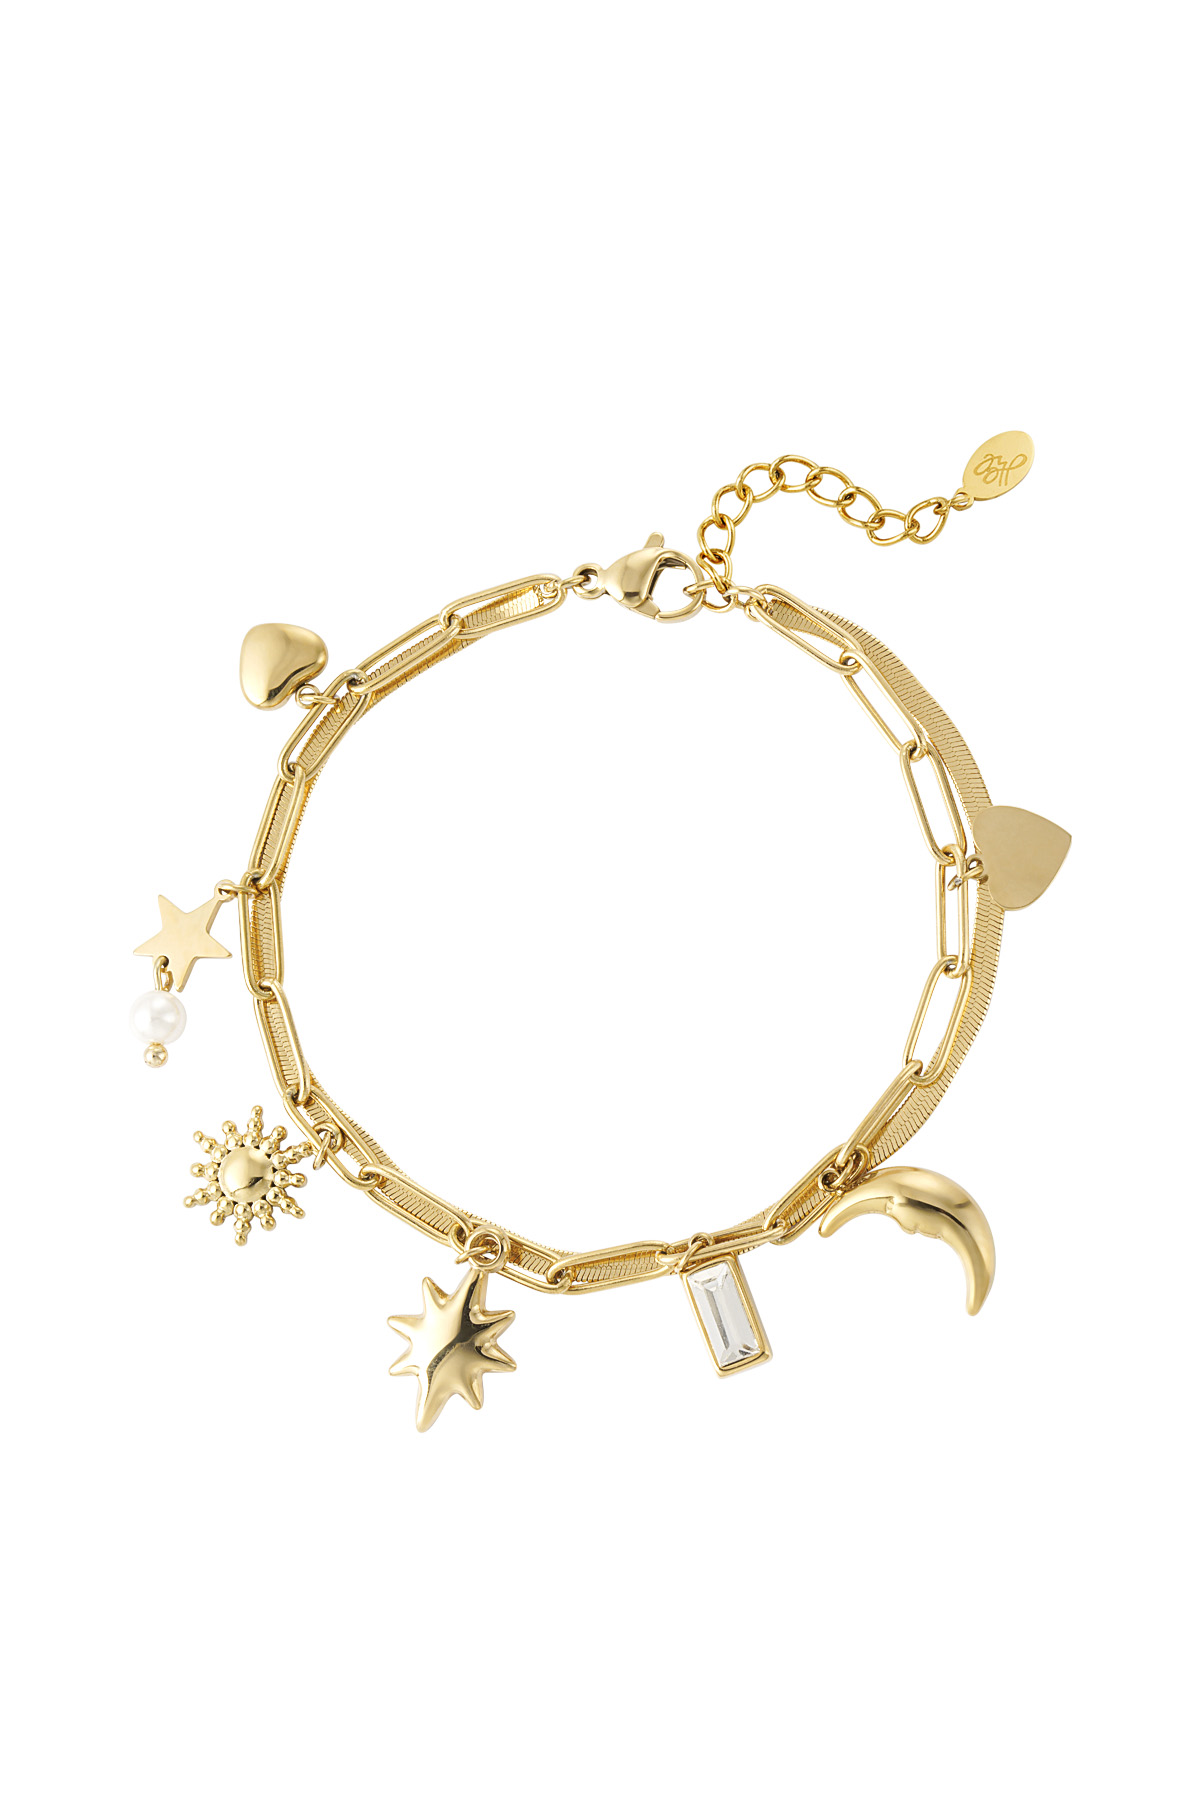 Tag- und Nacht-Charm-Armband – Gold